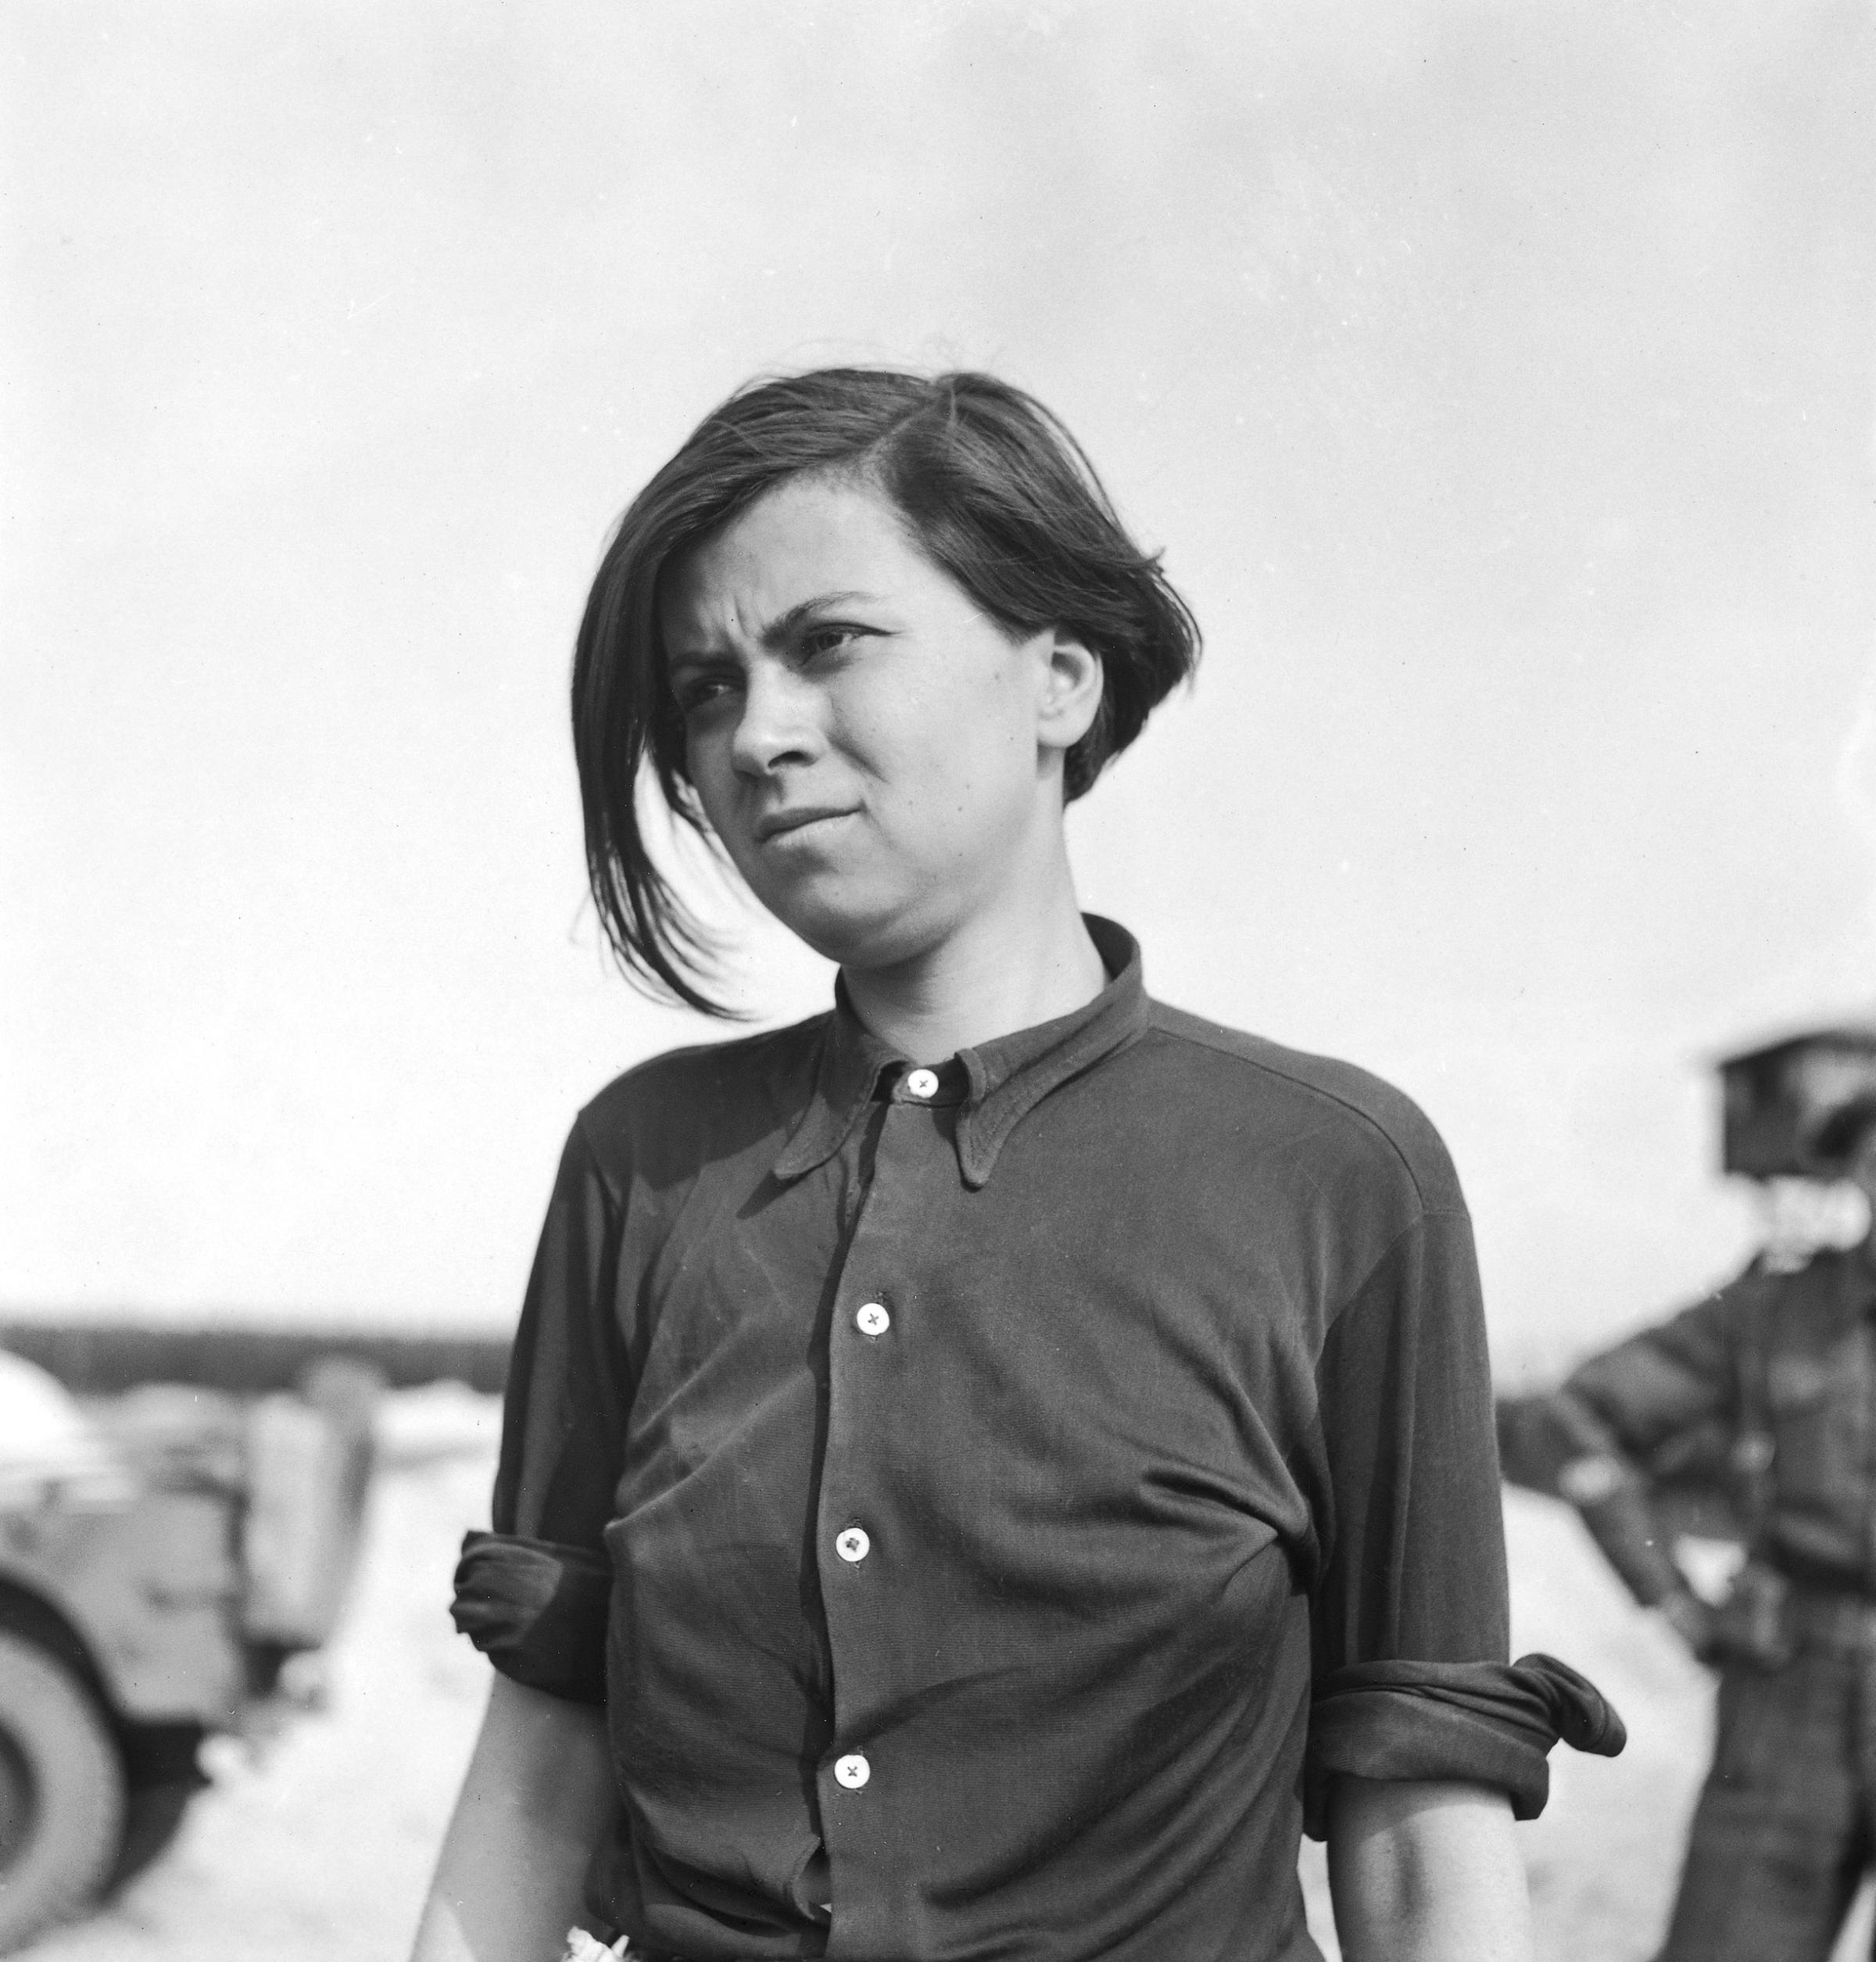 Annaliese Kohlmann, former Nazi female guard noted for her cruelty, Bergen-Belsen, 1944.